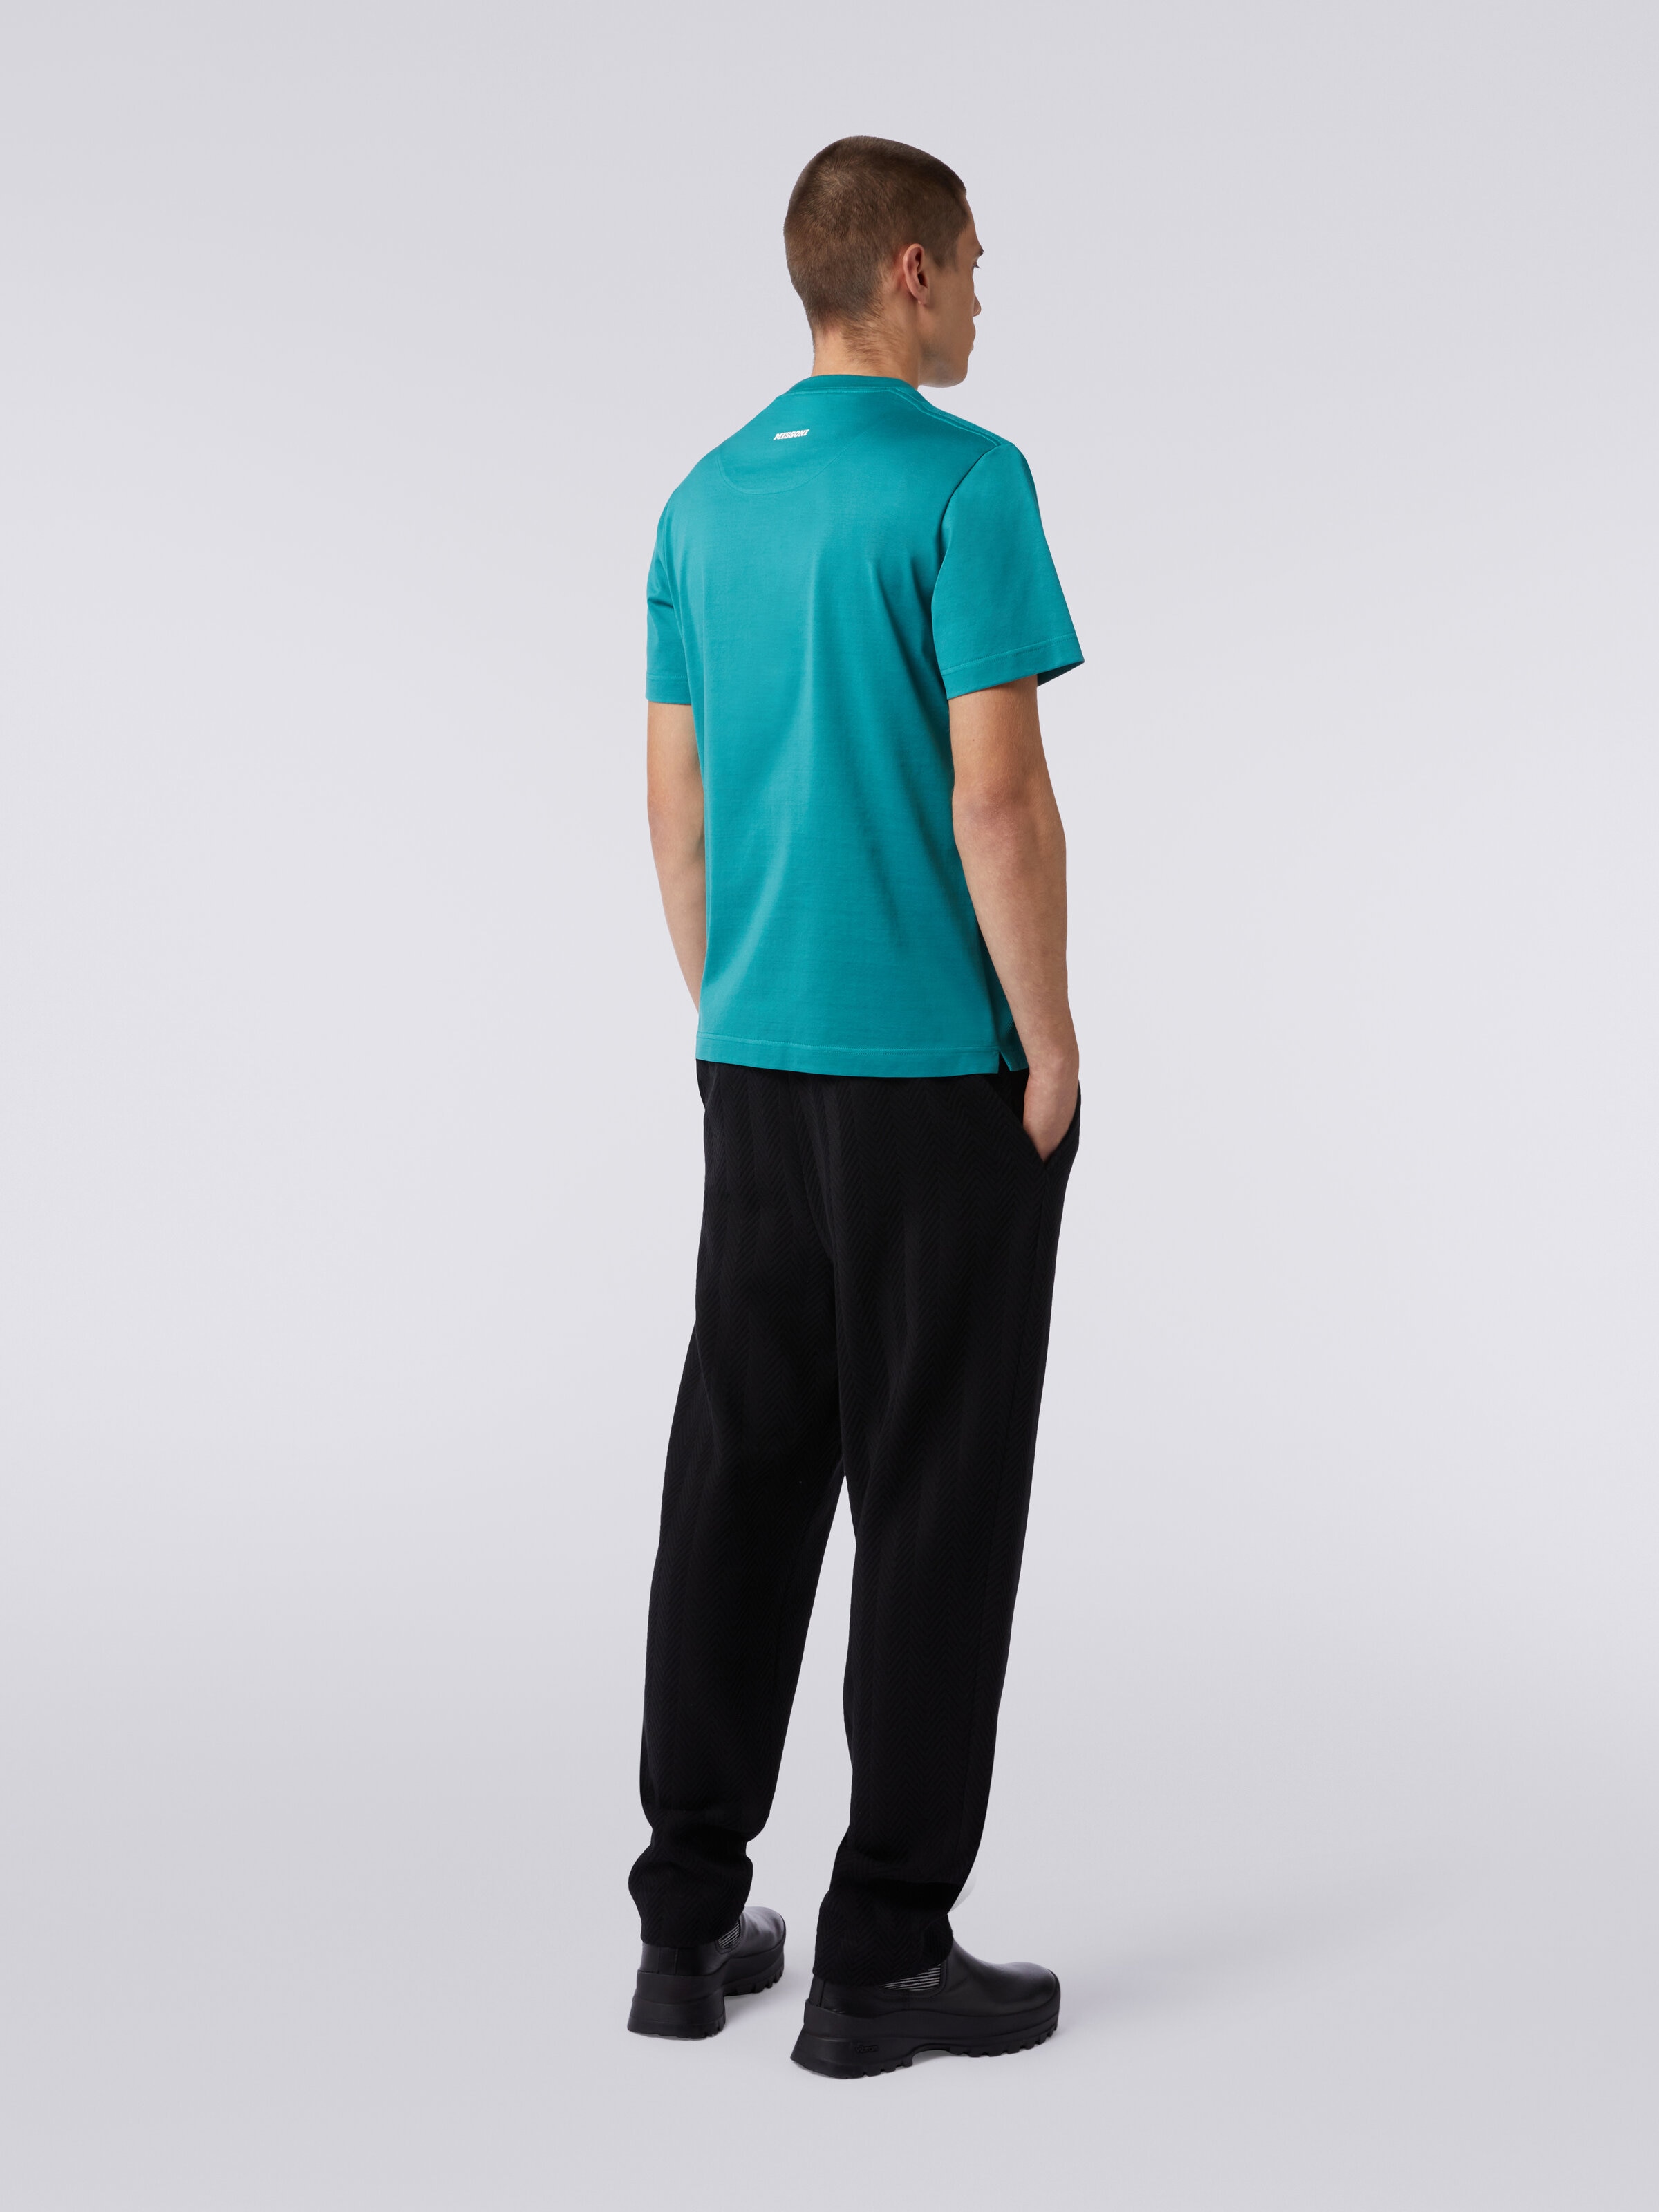 Kurzärmeliges Baumwoll-T-Shirt mit Zickzackmuster, Grün  - 3